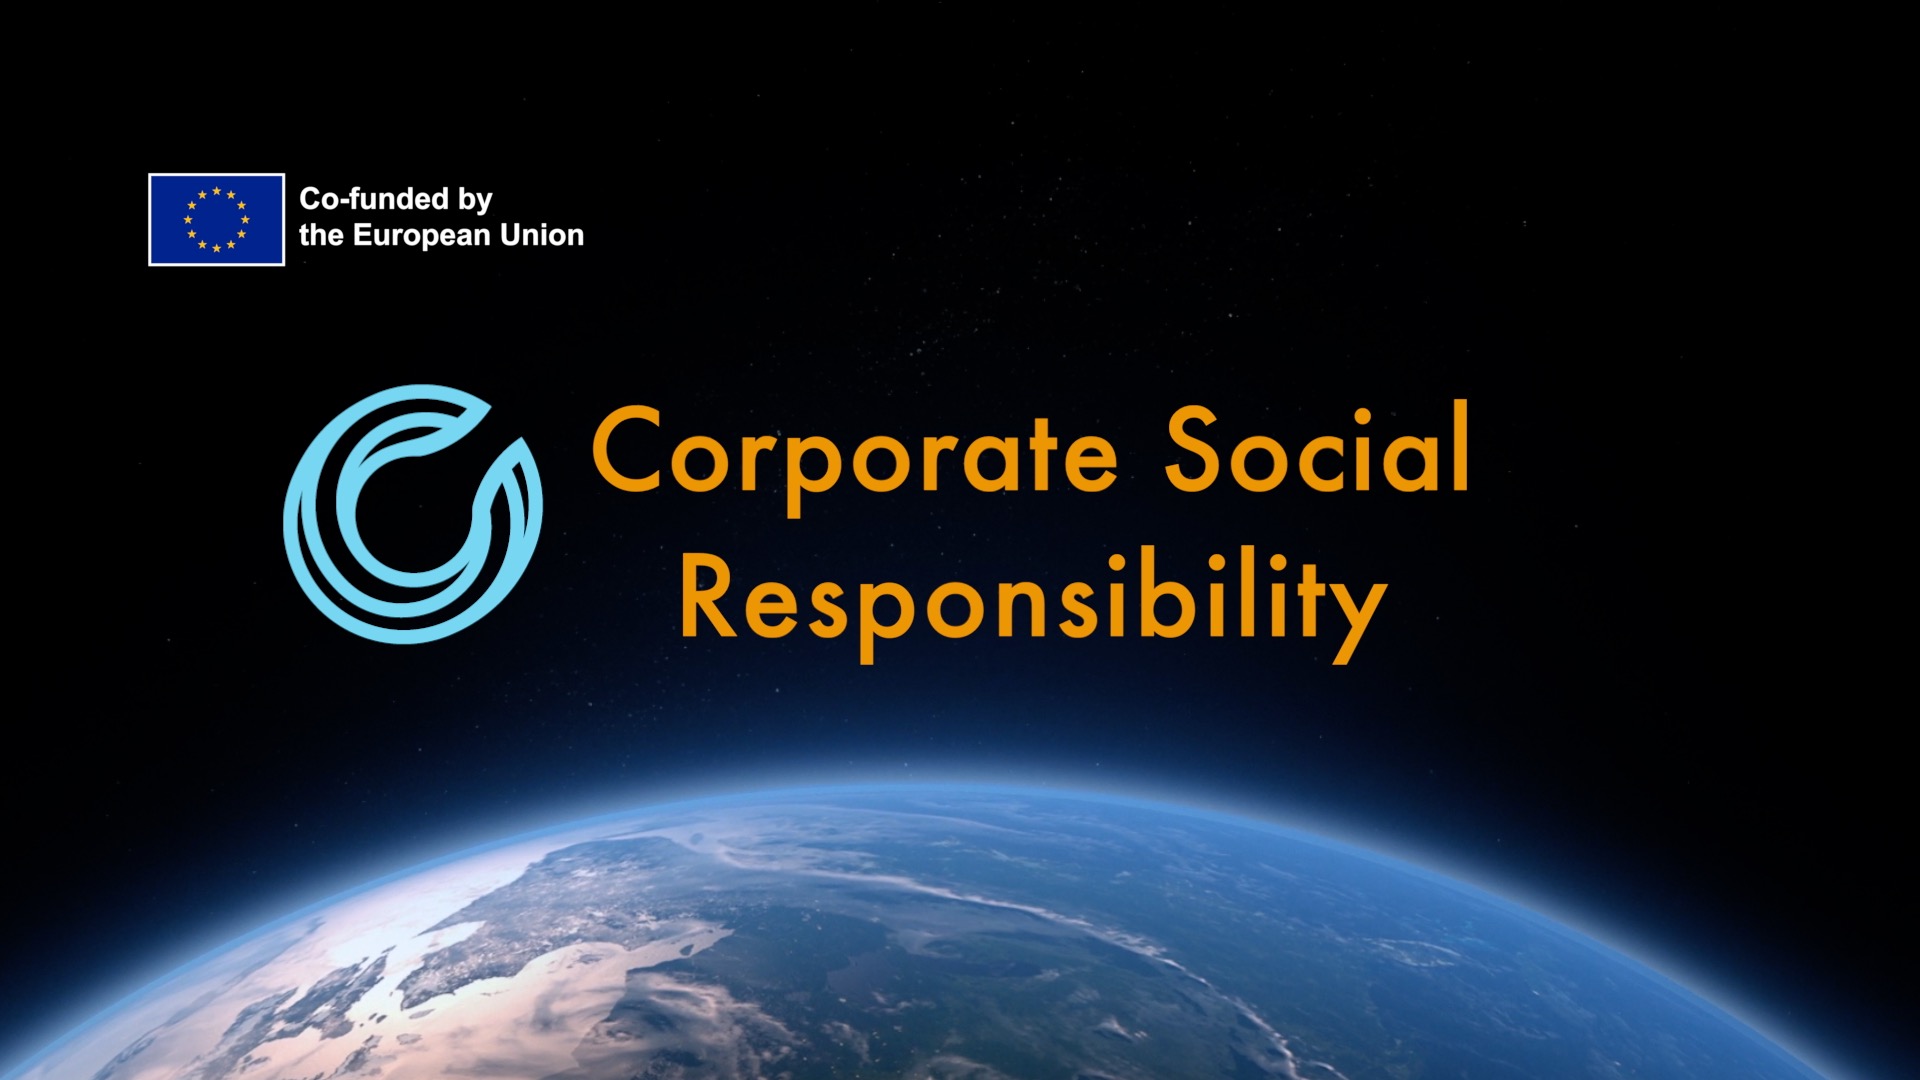 CSR Introduction